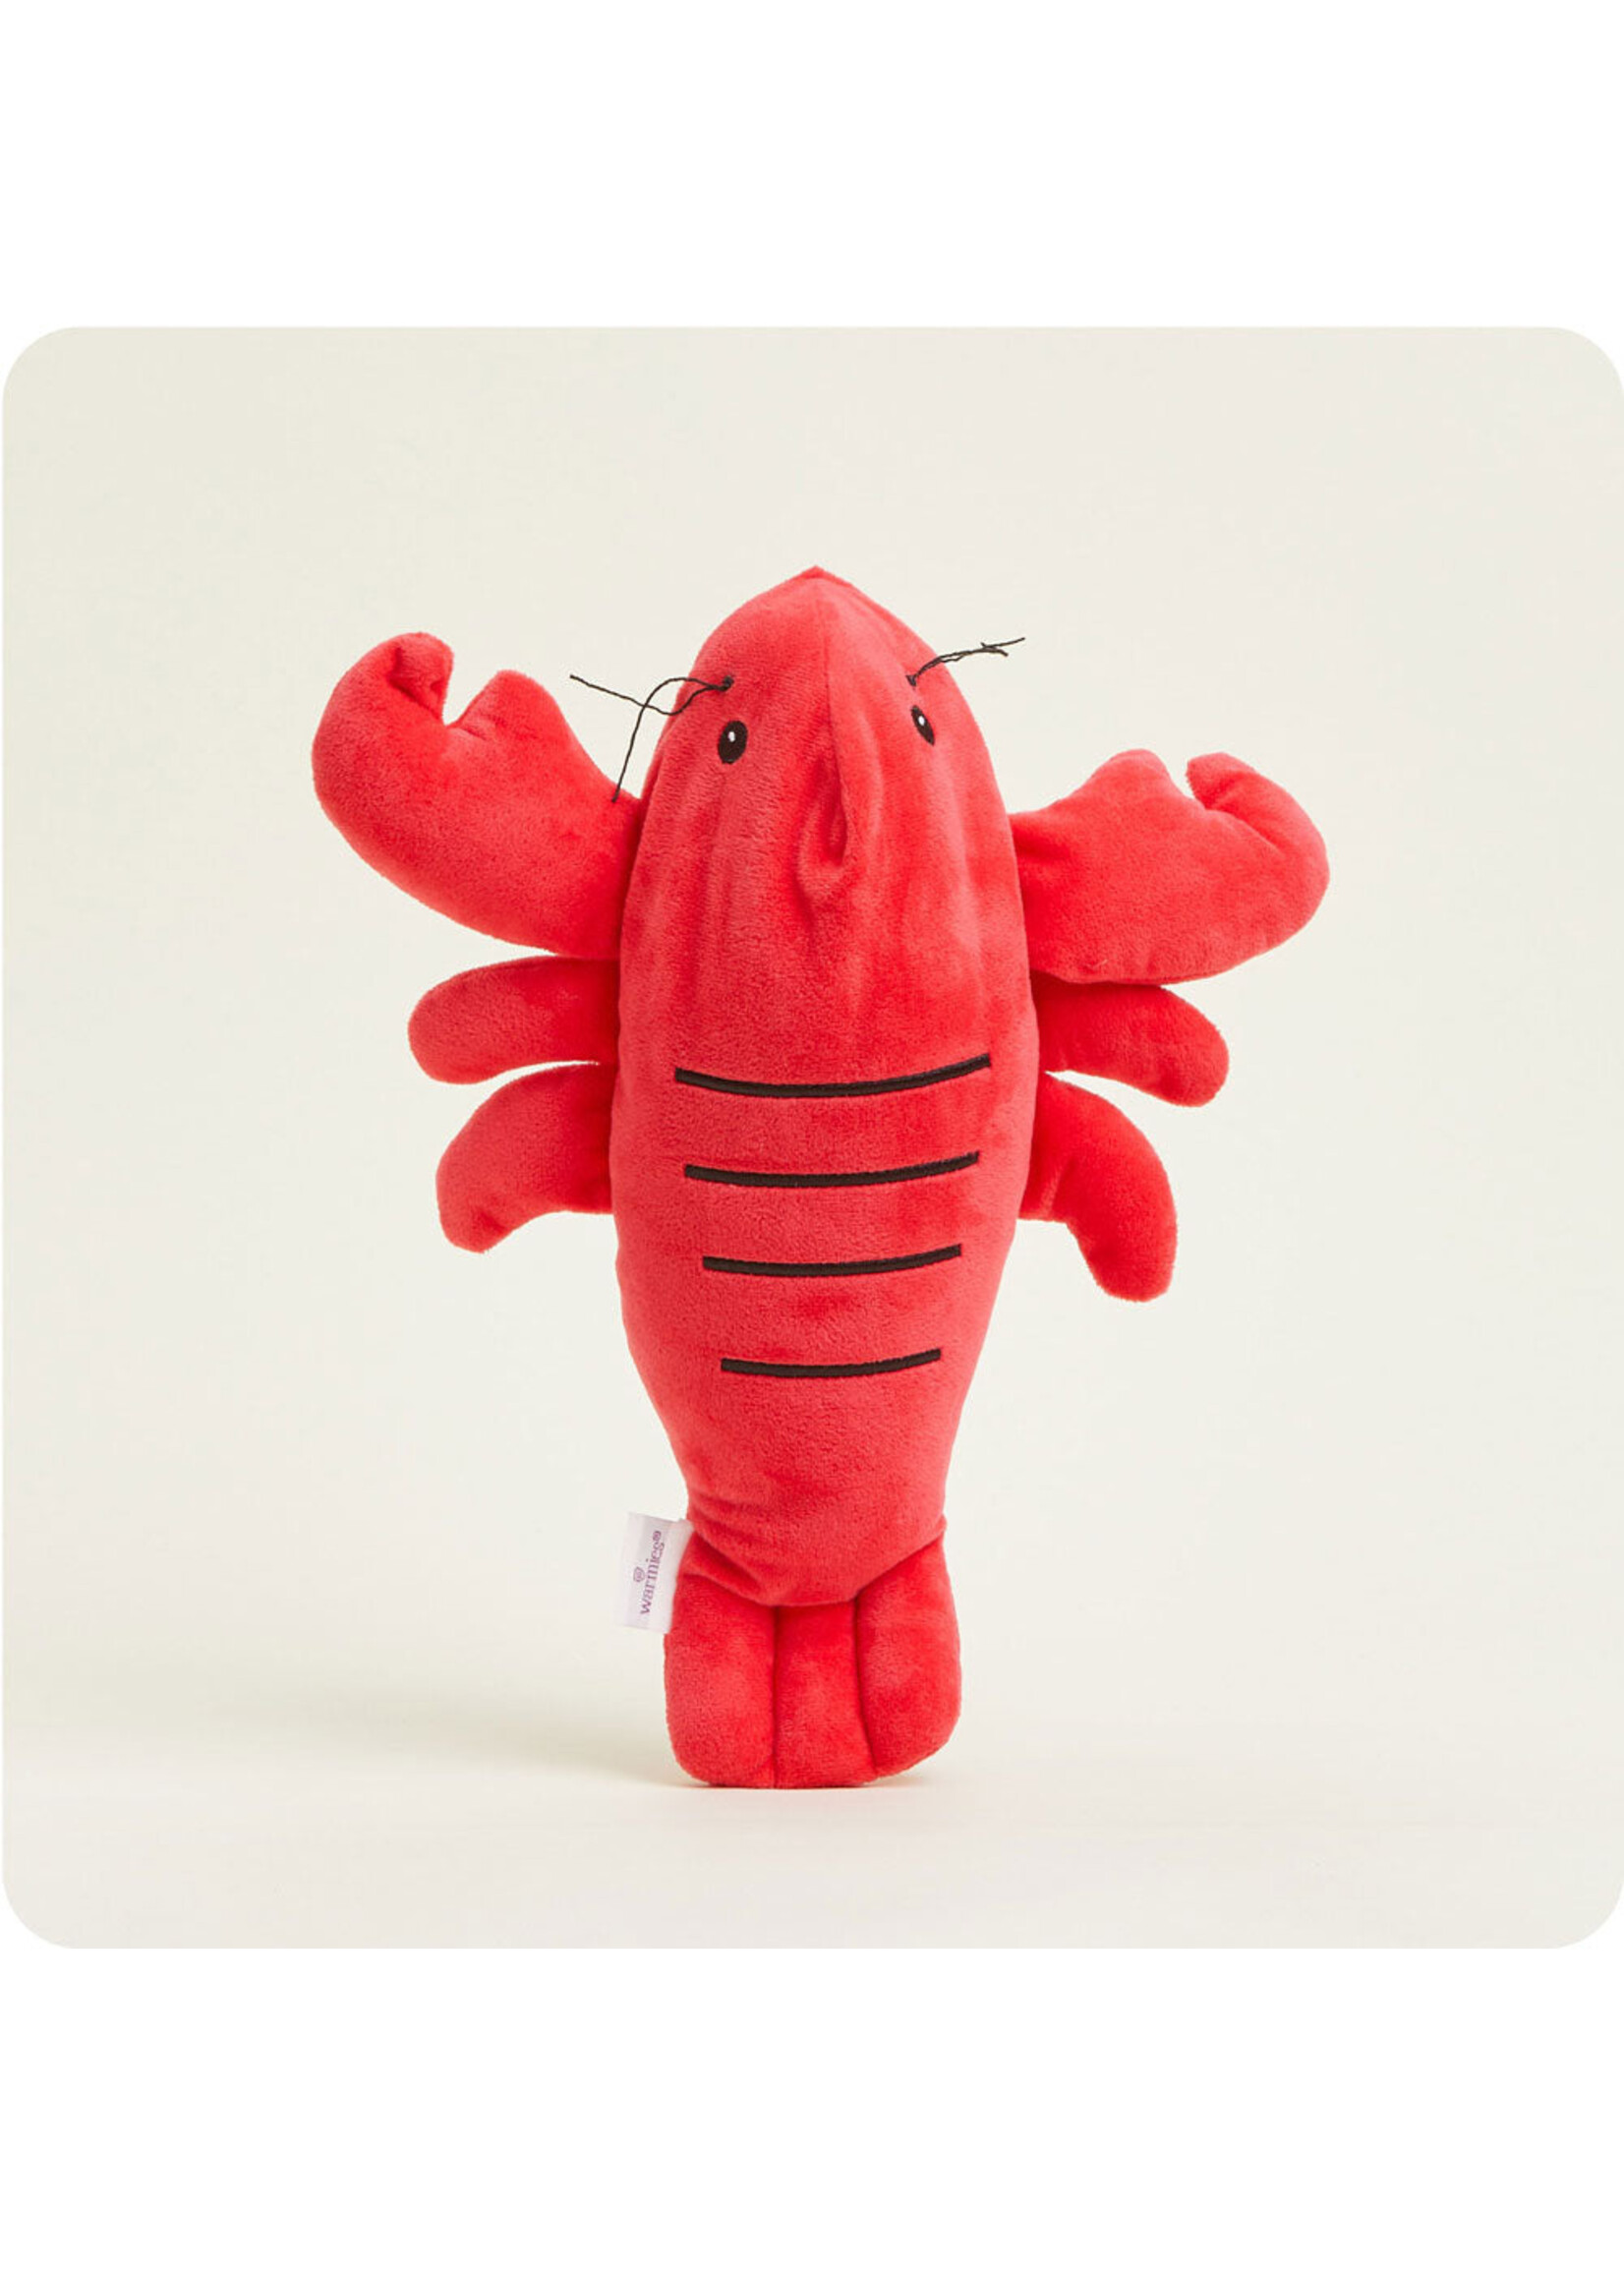 Warmie Warmies Lobster